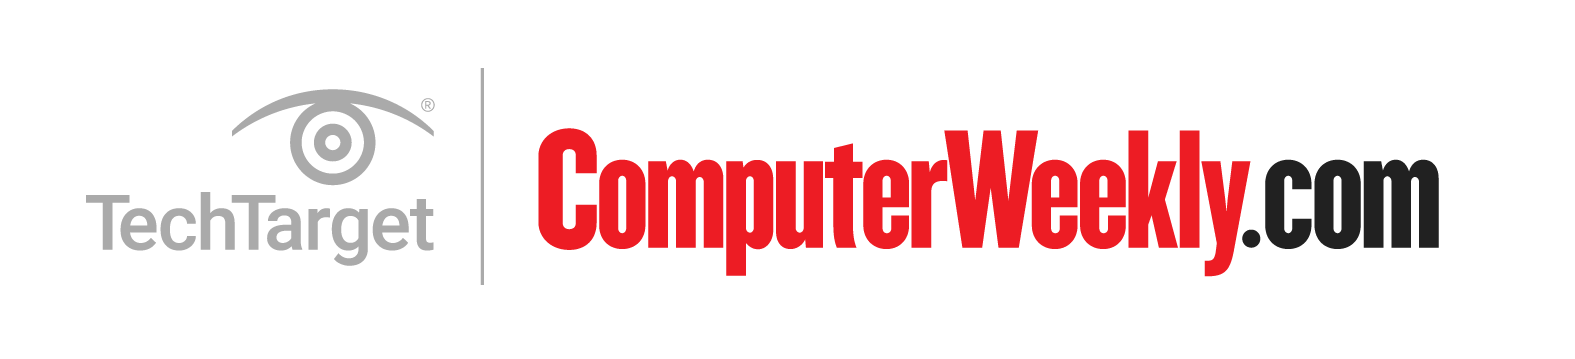 TechTarget ComputerWeekly logo